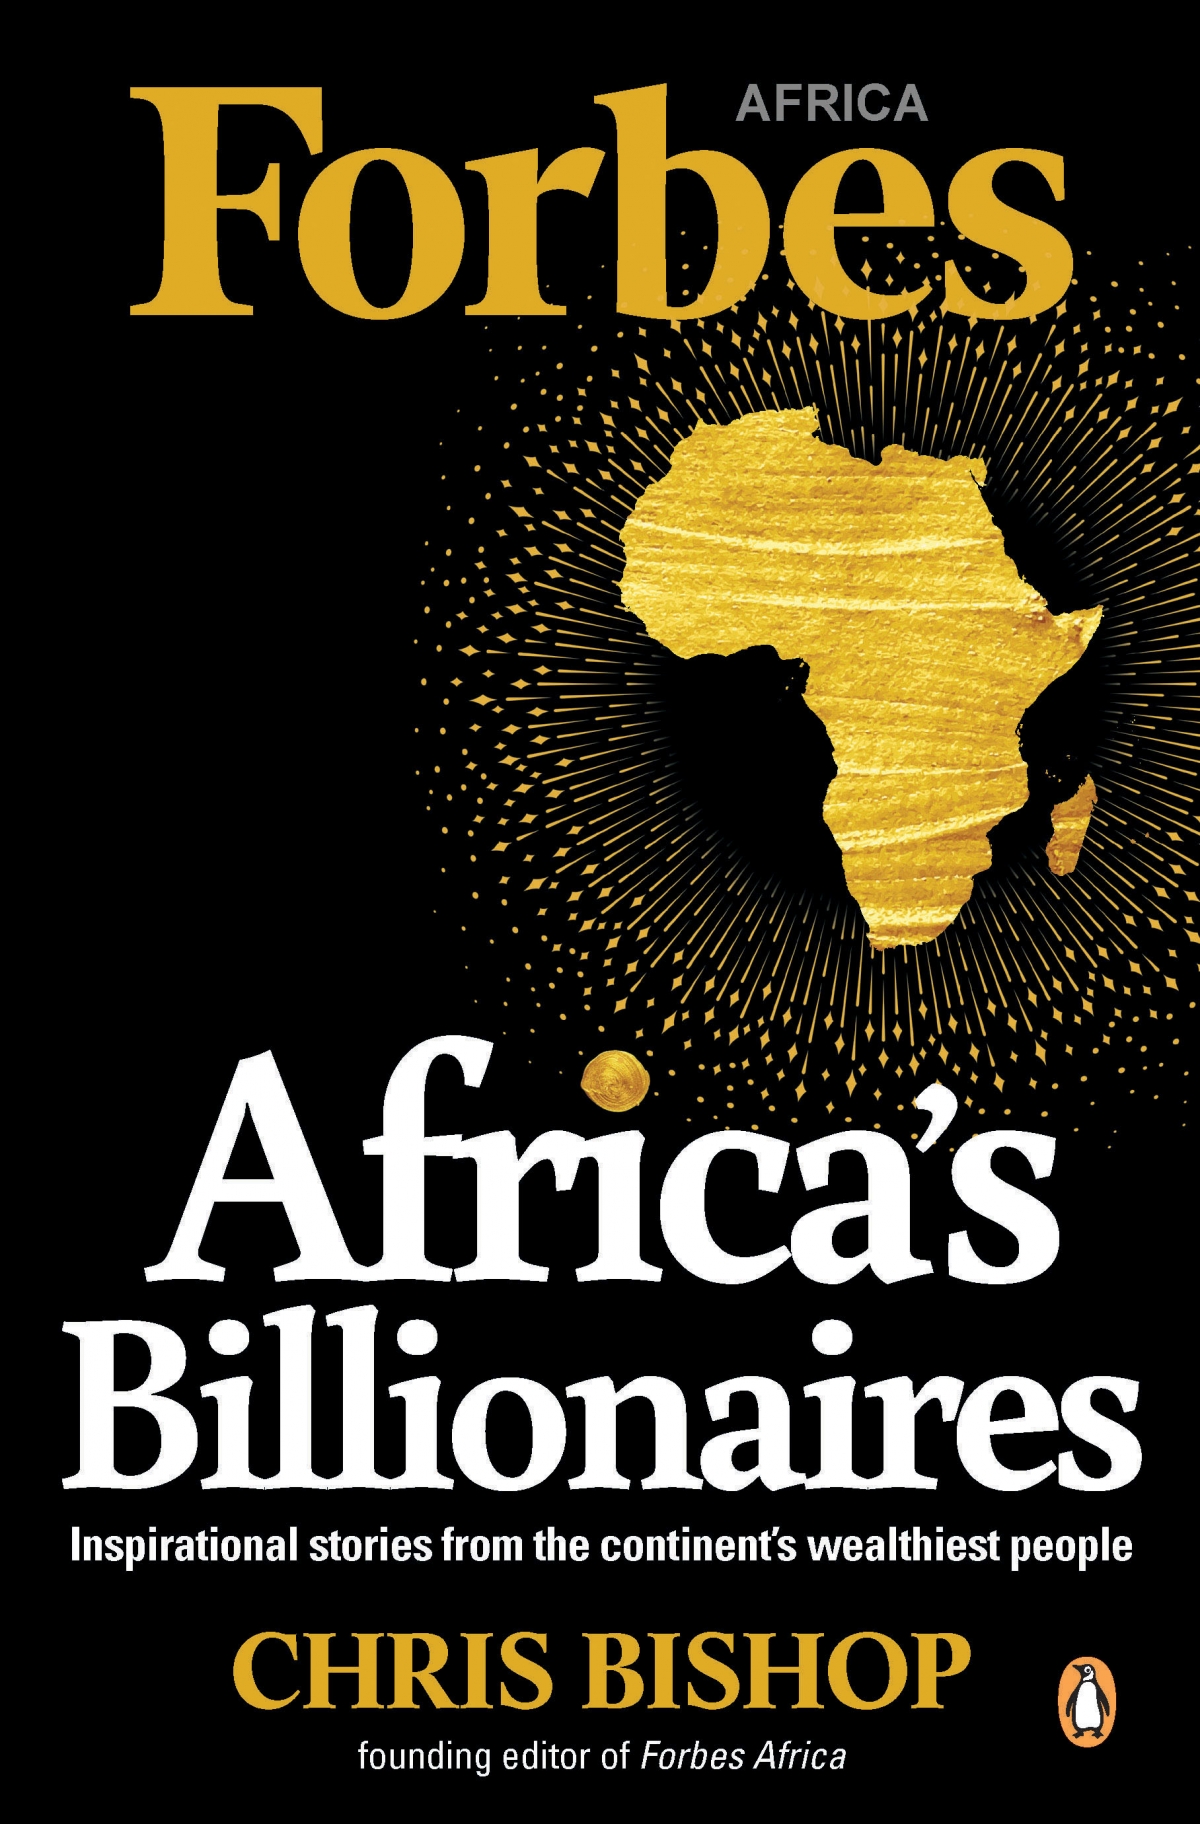 Africa’s Billionaires